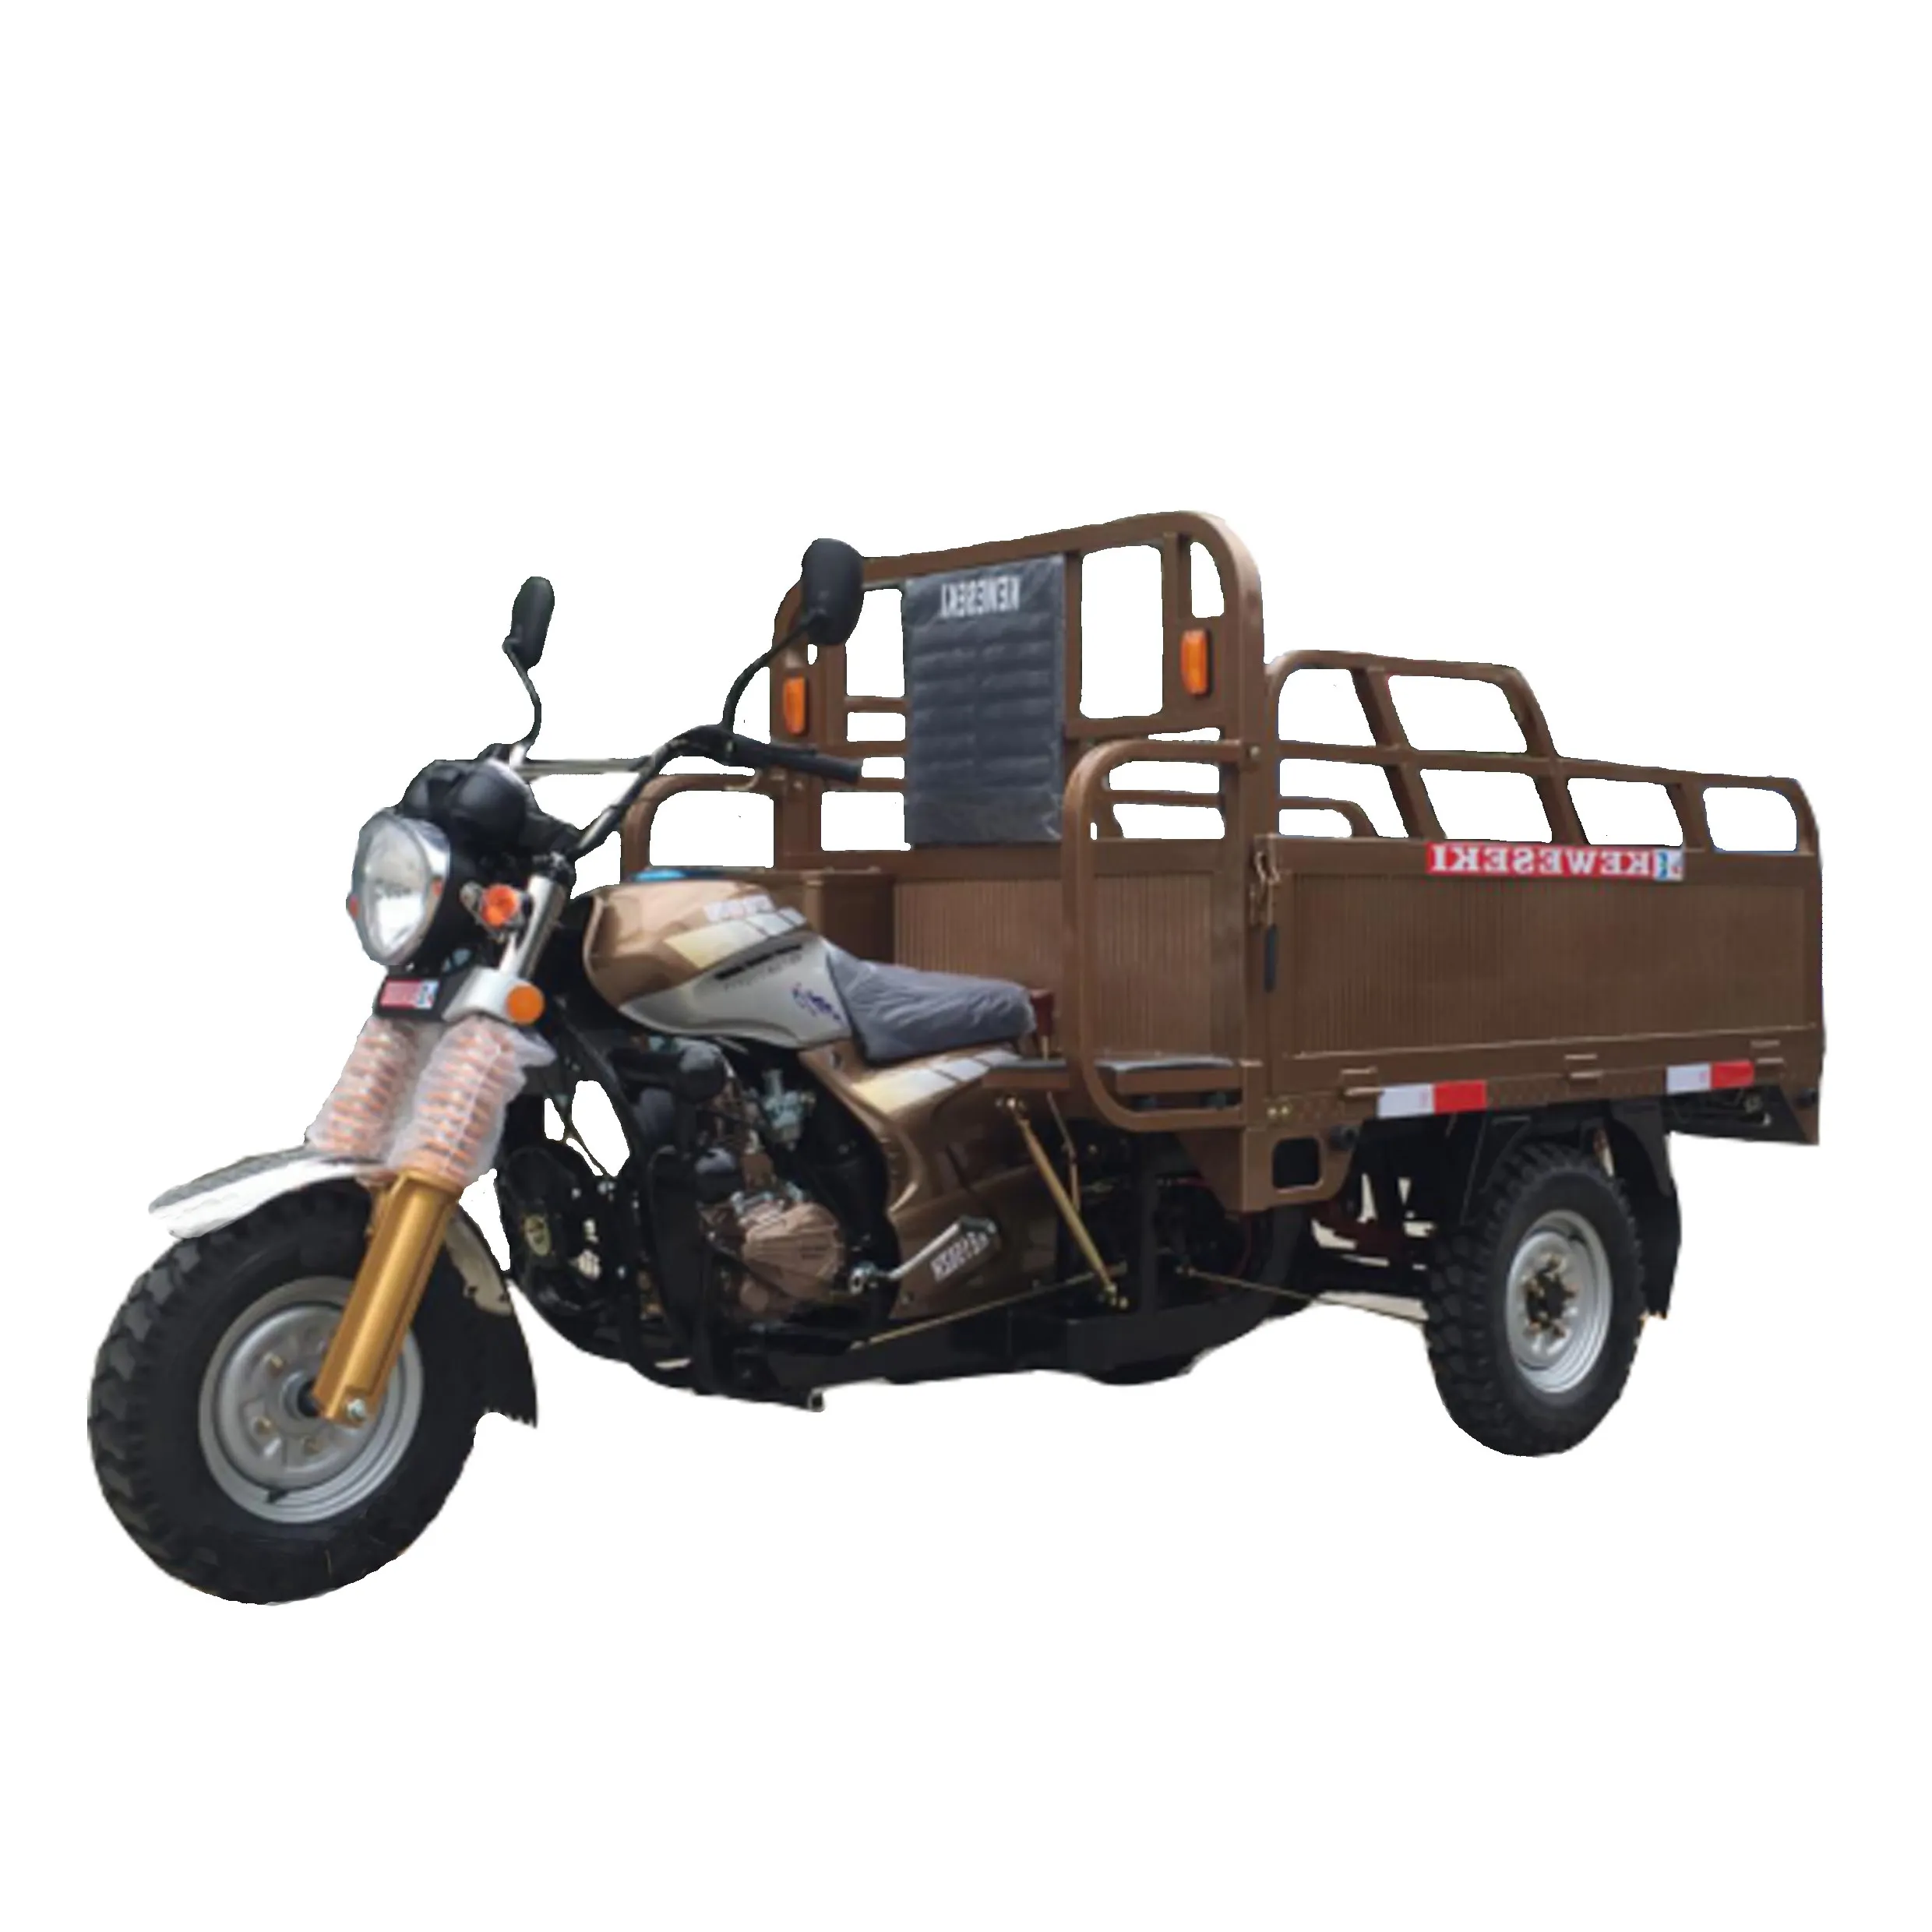 YAOLON Hersteller Trike Dreirad-Fracht motorräder 150ccm 3-Rad-Benzin-Motorrad-Dreiräder